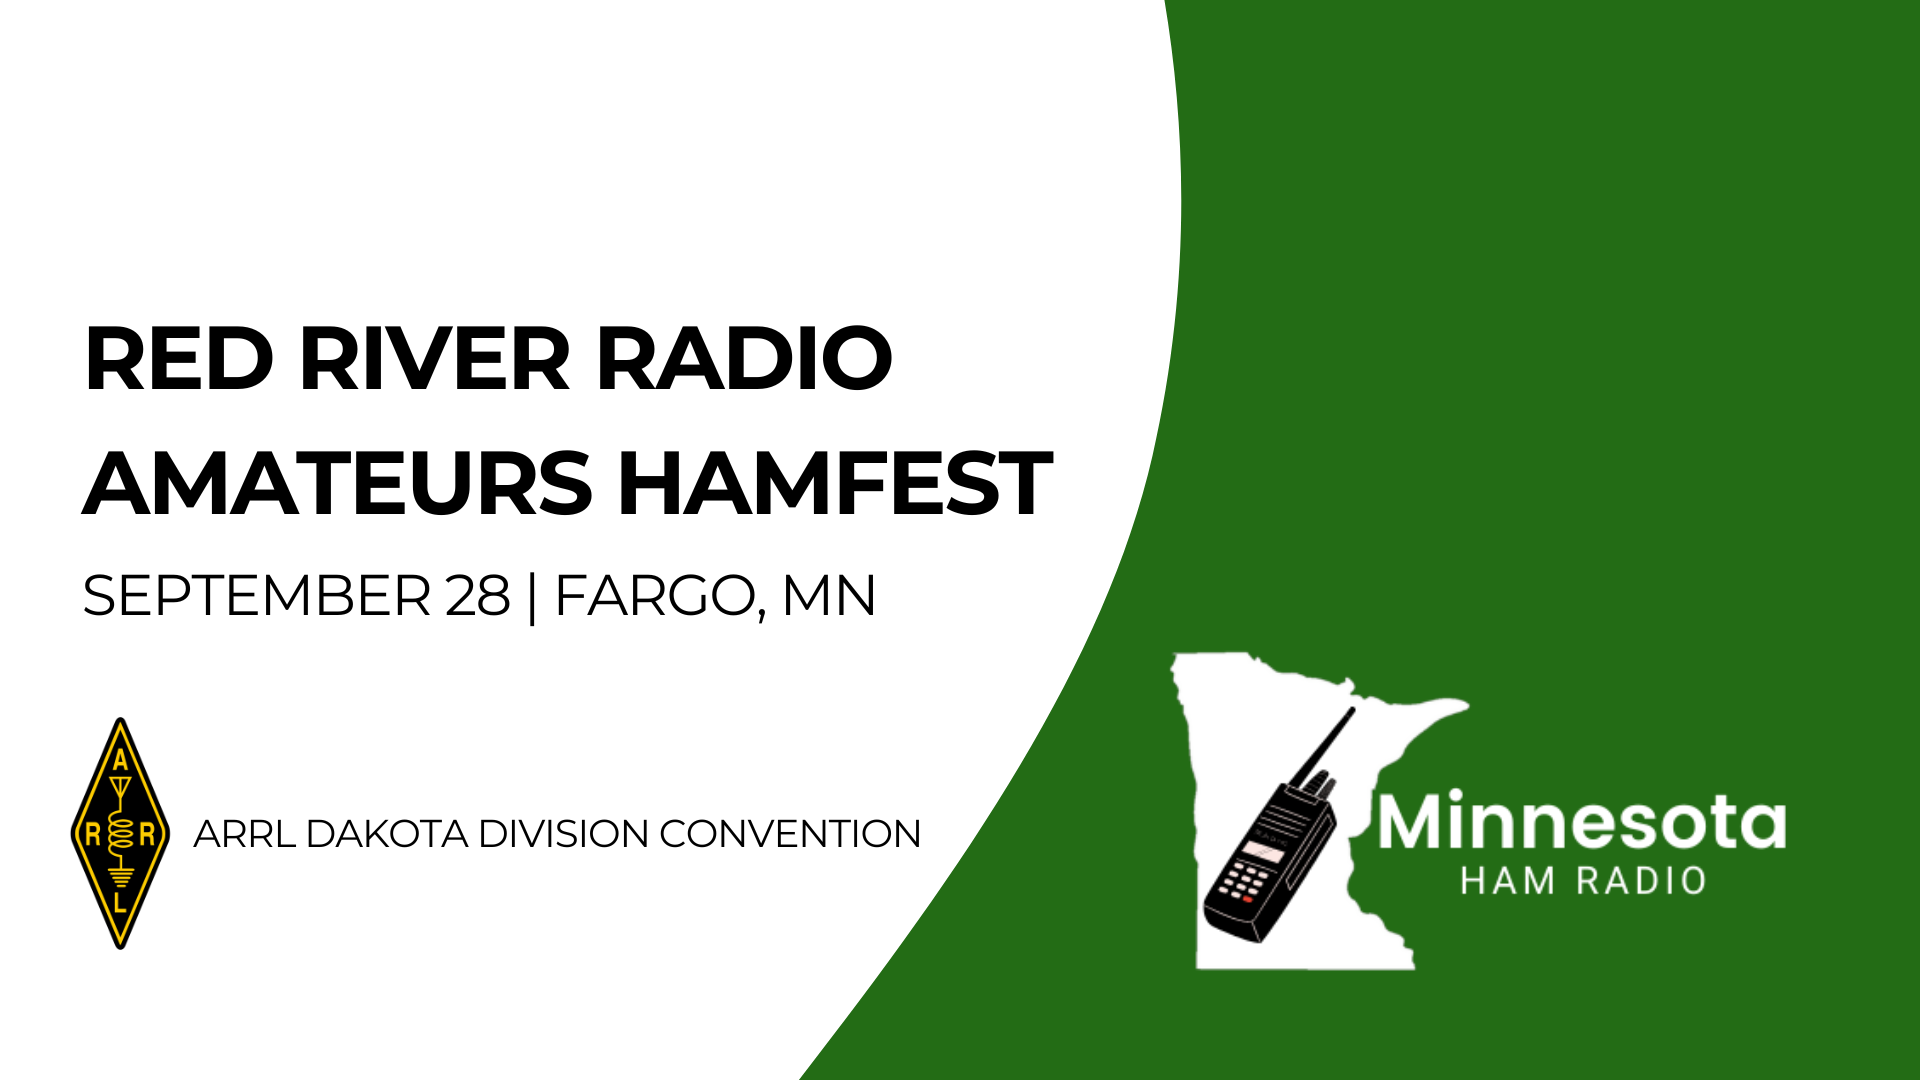 Red River Radio Amateur Hamfest